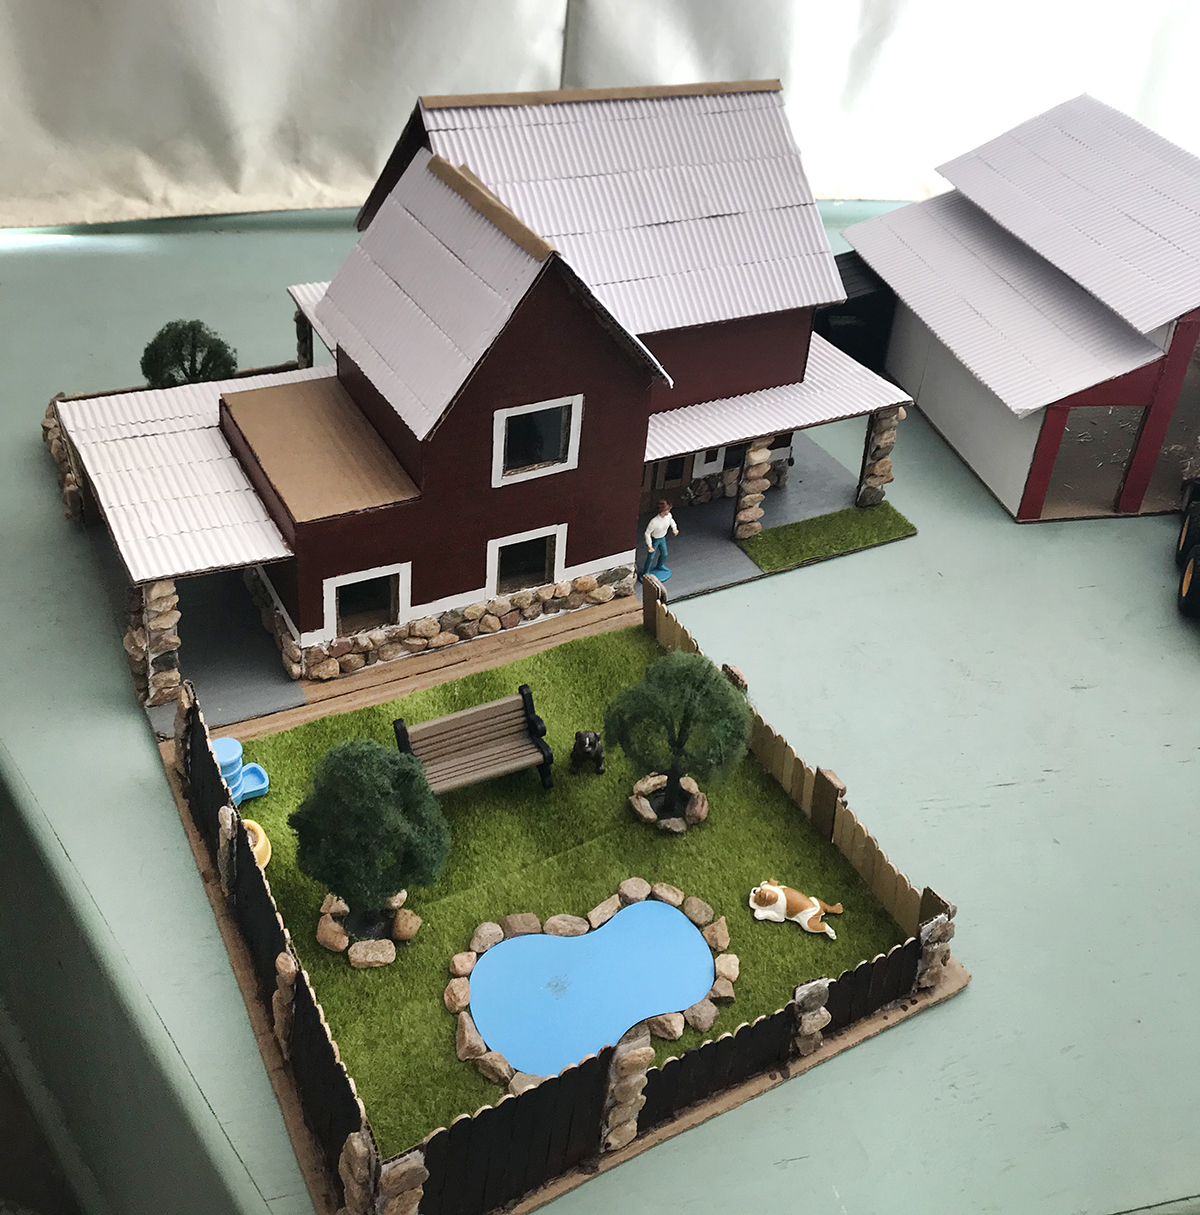 Kazyen Green's model home and barn